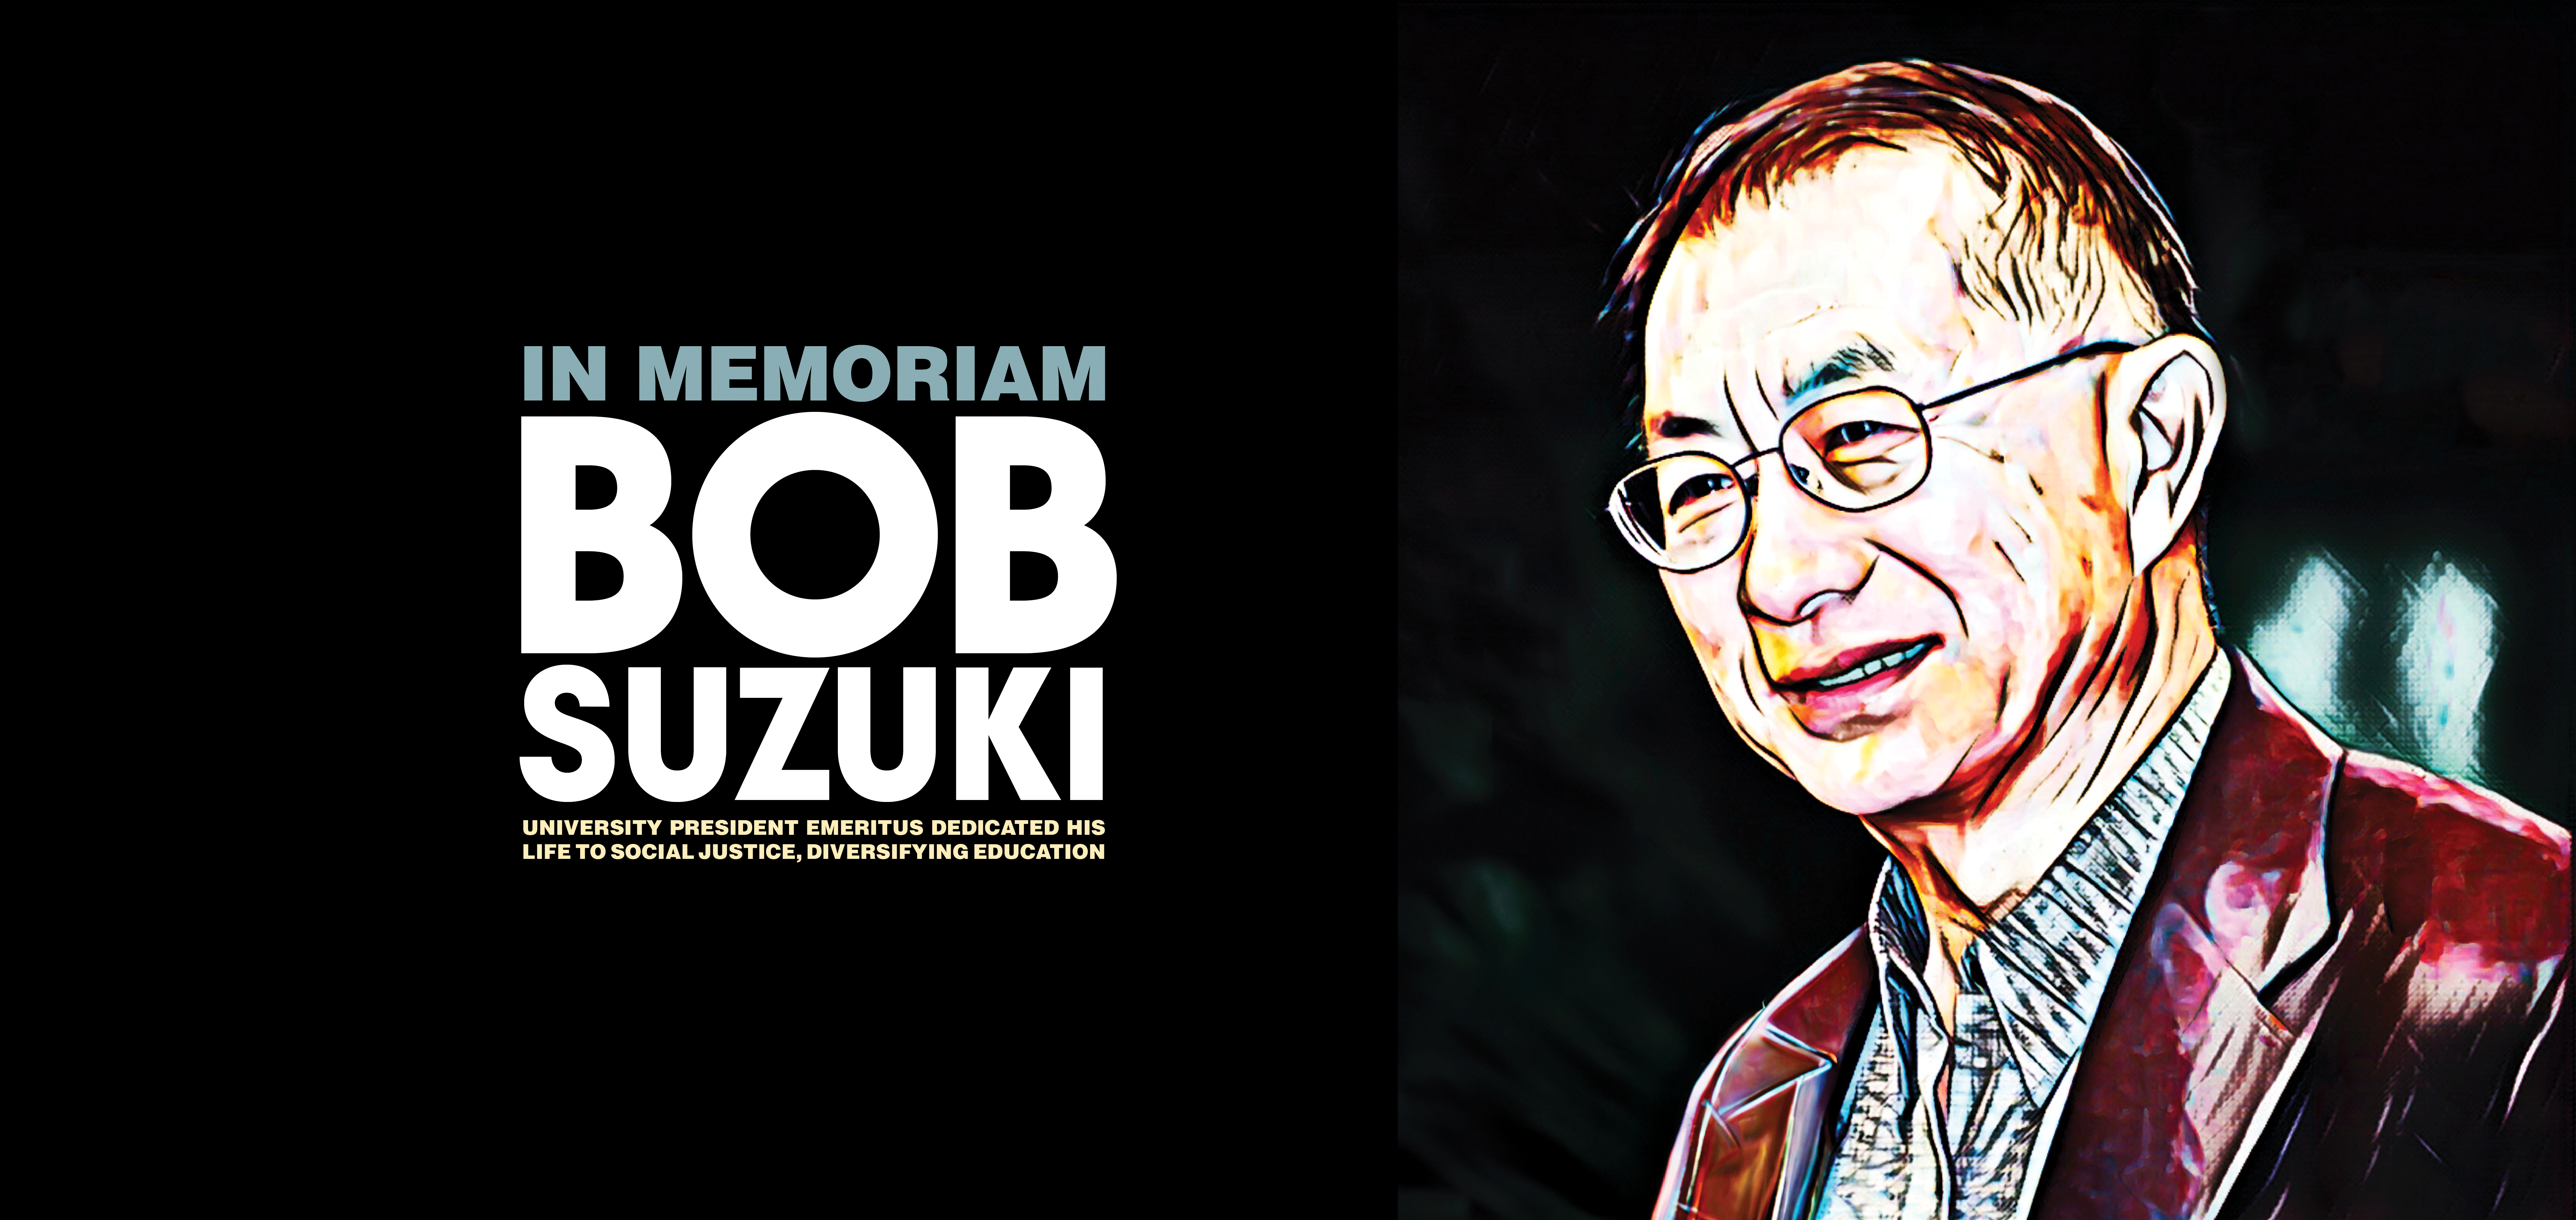 In Memoriam Bob Suzuki. University President emeritus dedicated his life to social justice, diversifying education.